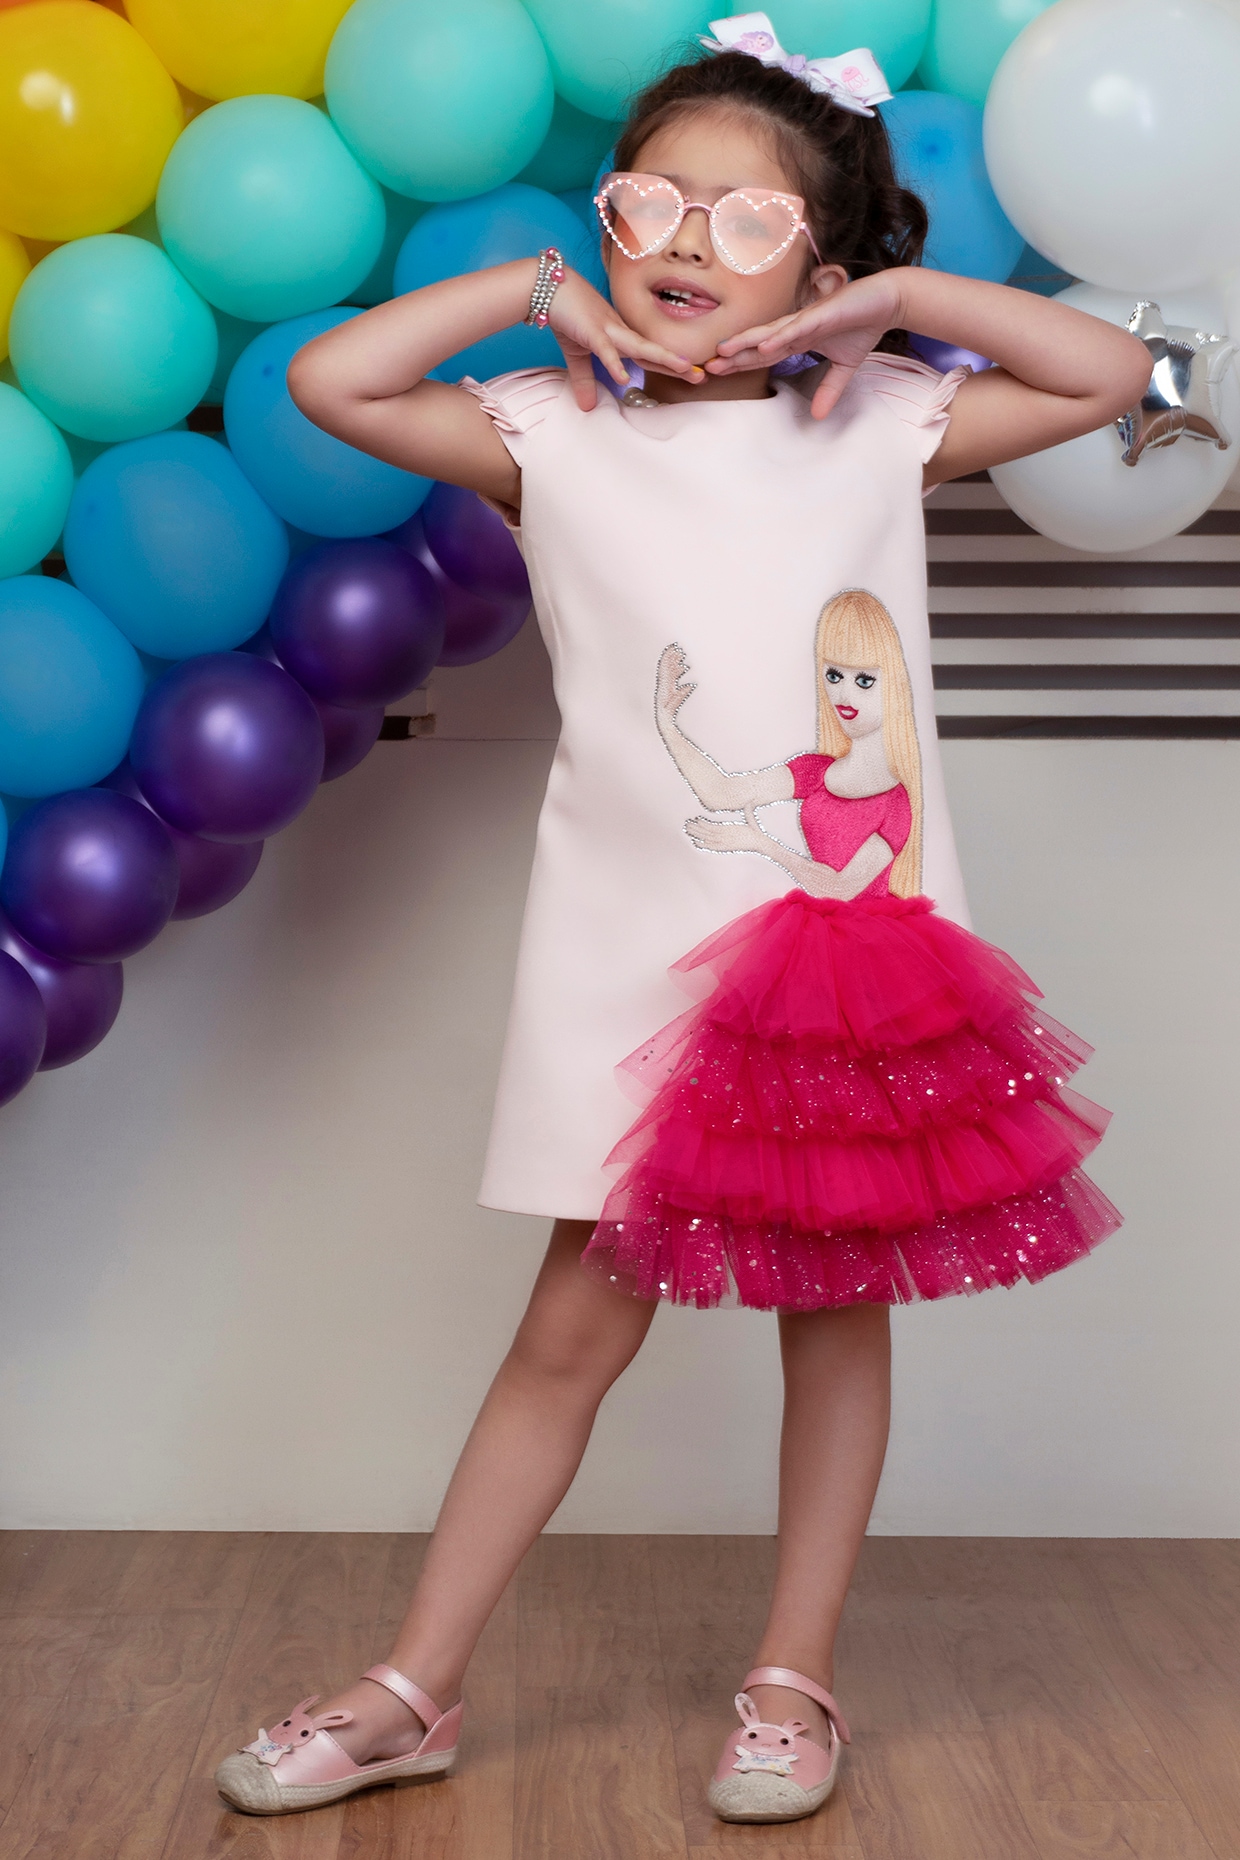 Carol Spencer's 35-year journey designing Barbie clothes